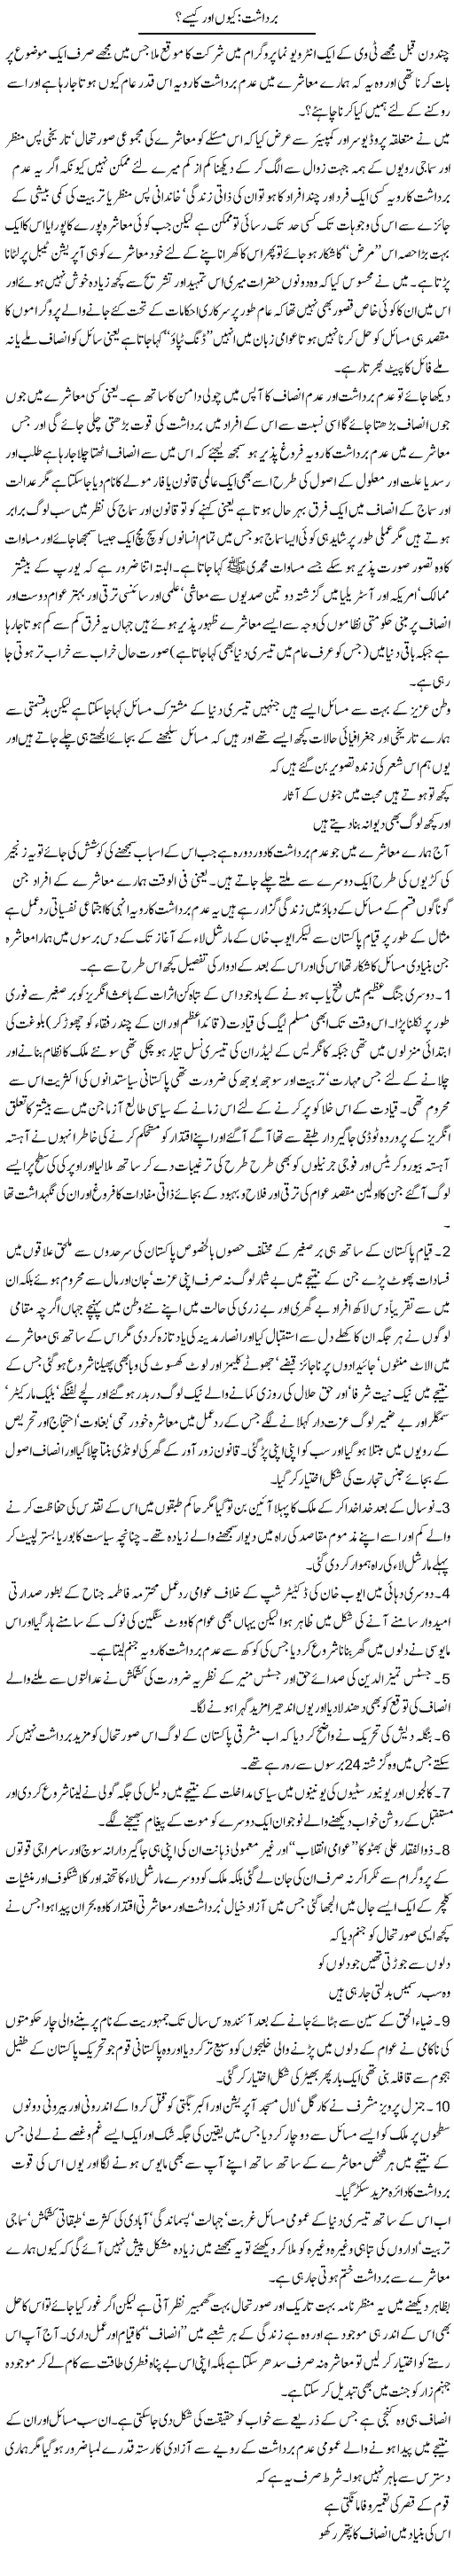 Society Issues Express Column Amjad Islam 8 September 2011